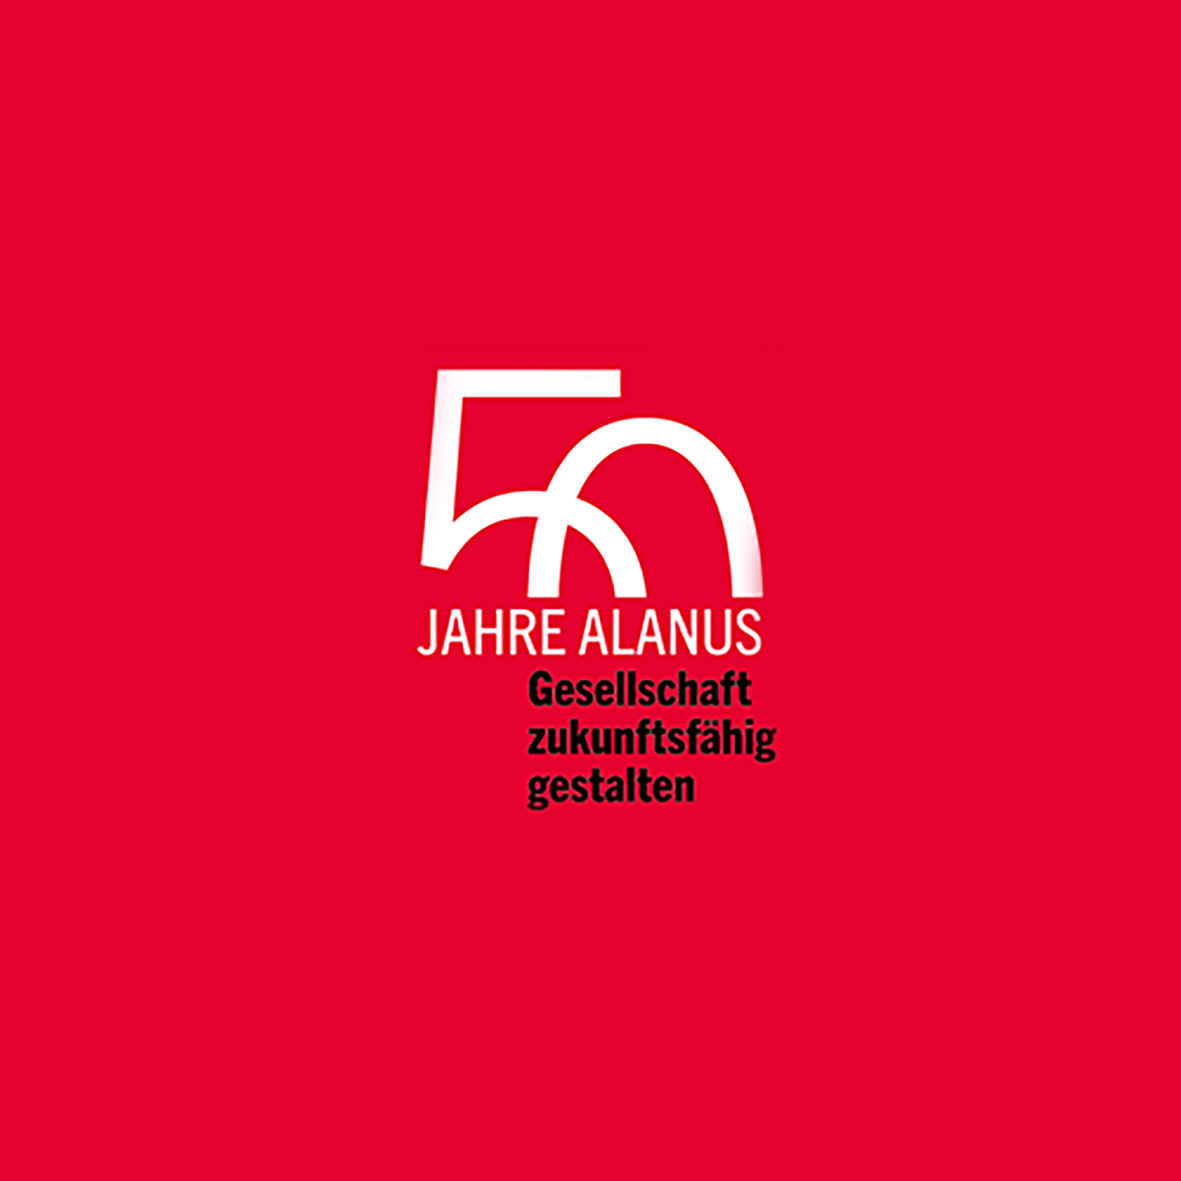 Alanus Hochschule und Alanus Werkhaus feiern „50 Jahre Alanus“